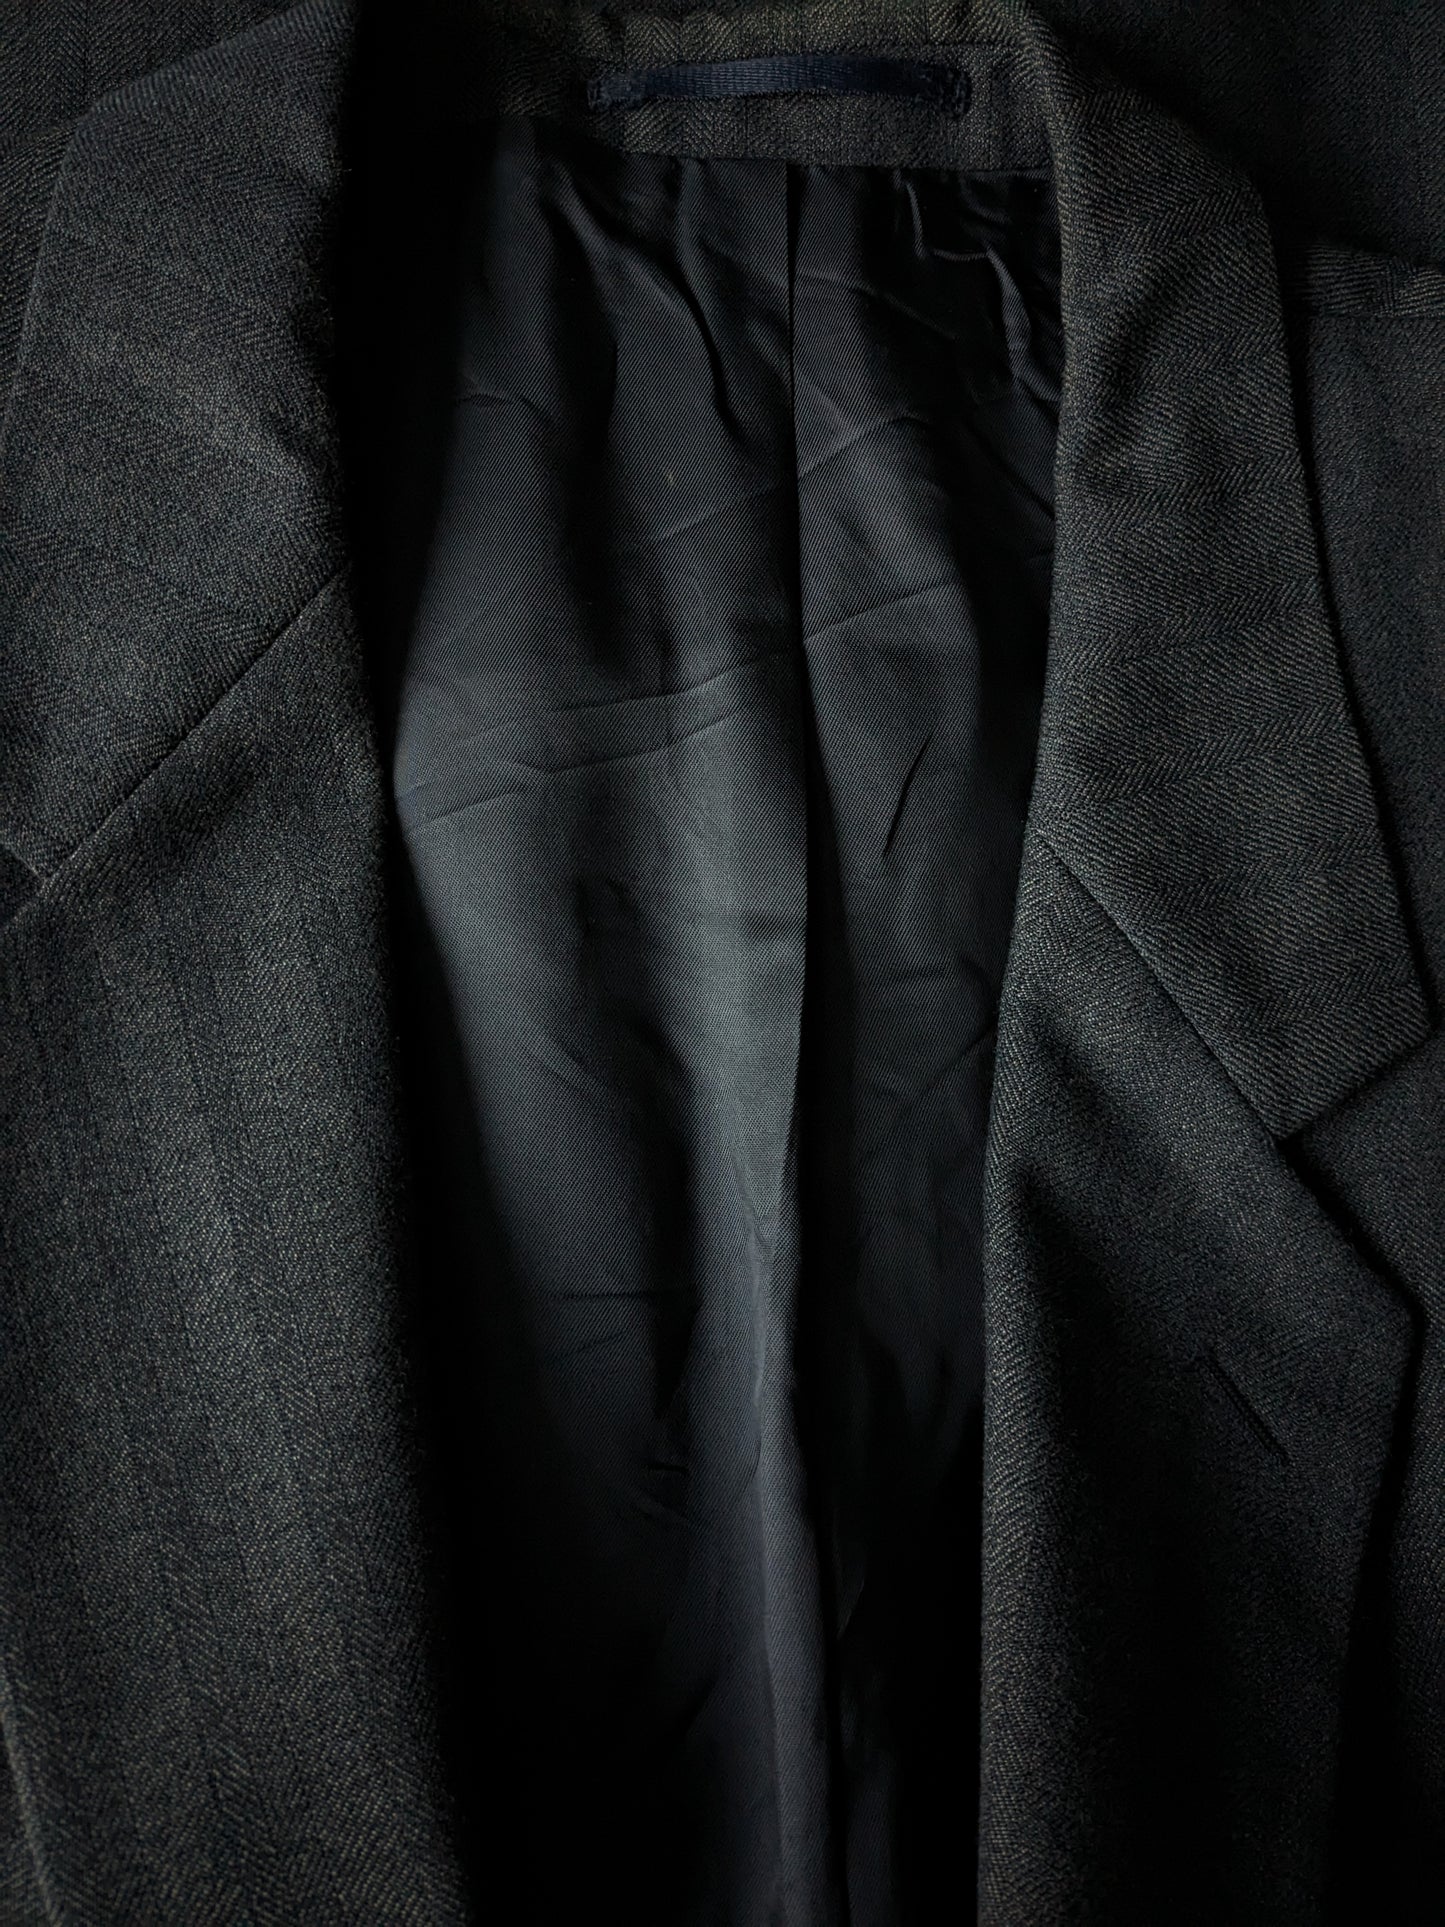 Varteks woolen jacket. Gray black herringbone motif. Size 56 / XL. 45% wool.